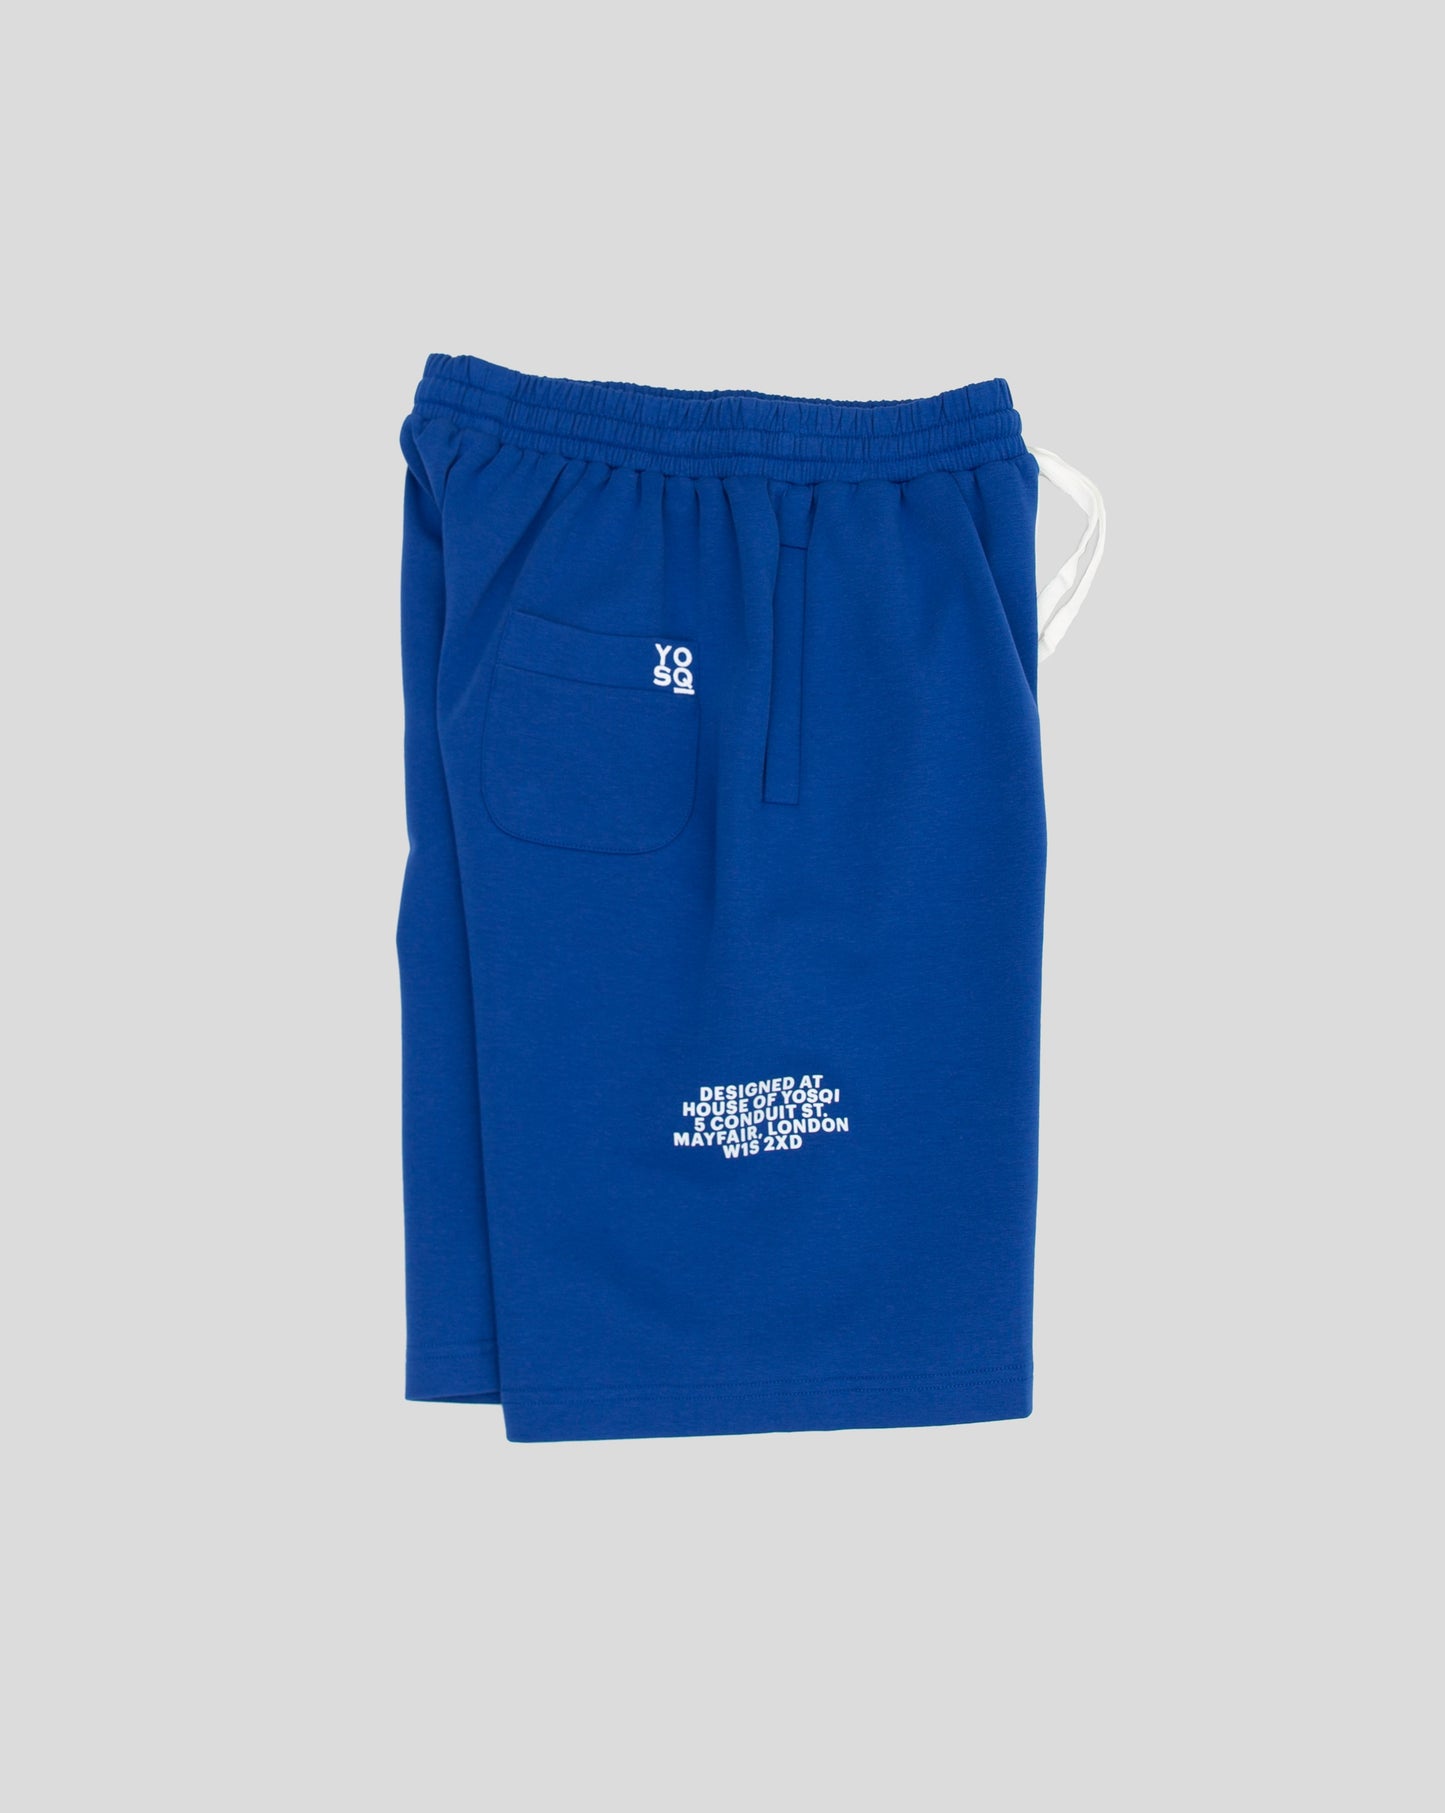 Embroidered YOSQI Shorts (Blue)